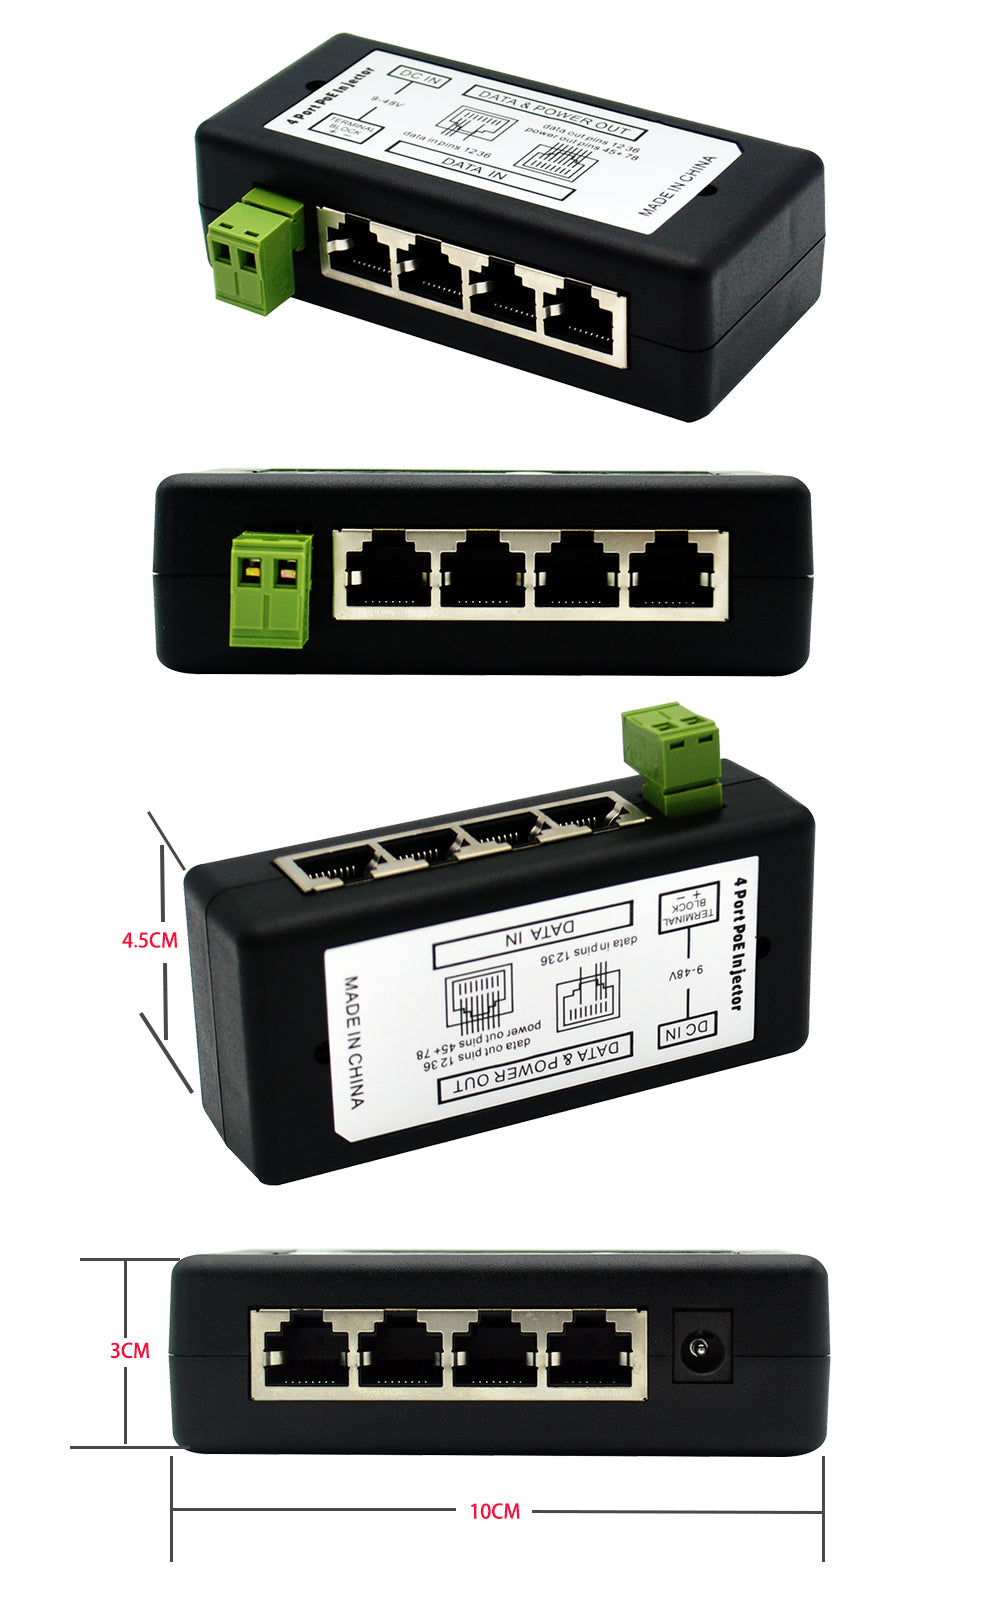 POE-Injektor 4Ports 8-Port-POE-Splitter für CCTV-Netzwerk